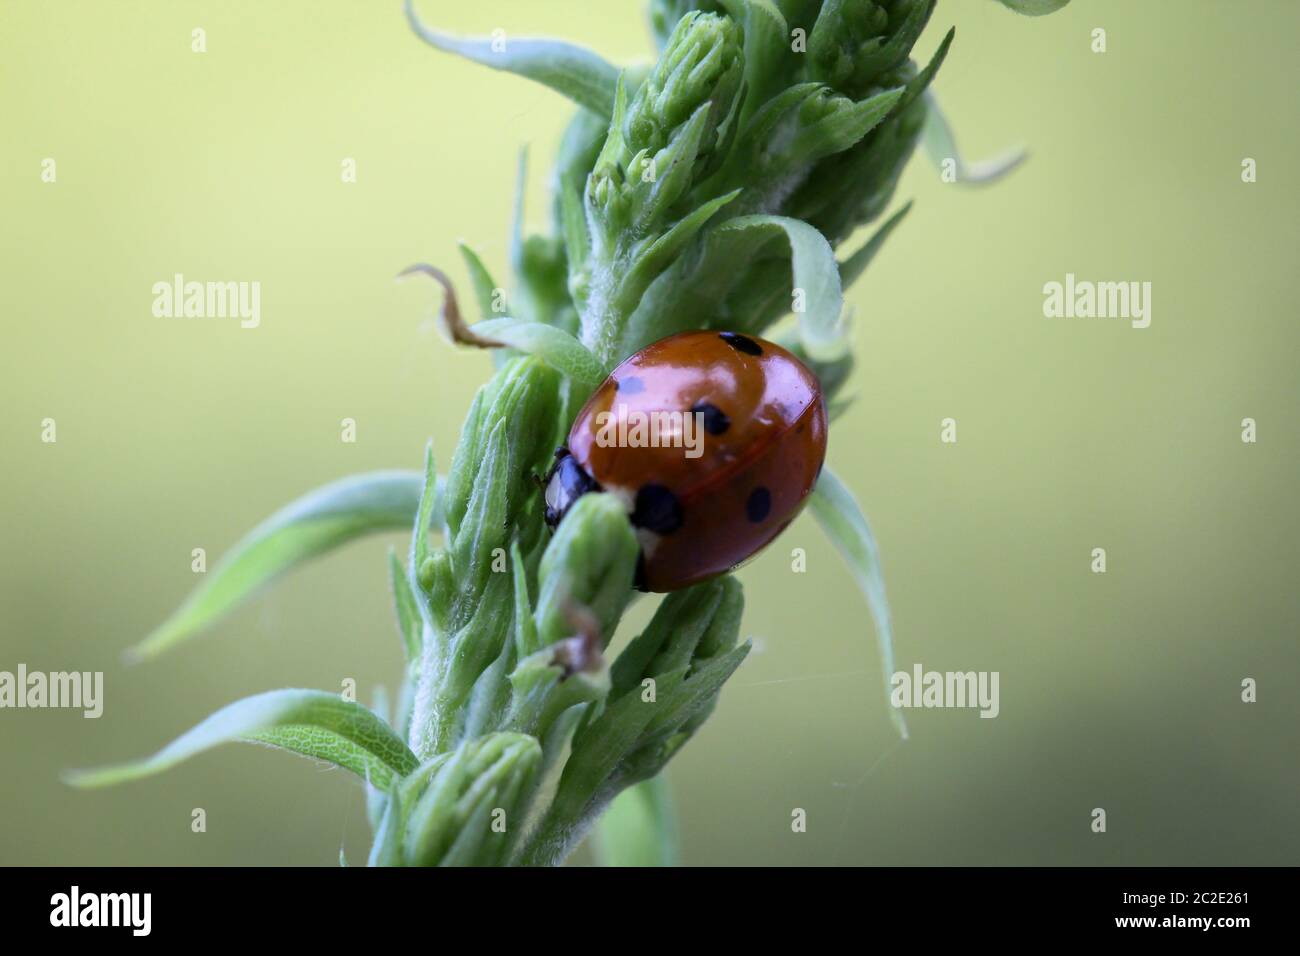 The Ladybird sits on a colored leaf. Macro photo of ladybug close-up. Stock Photo